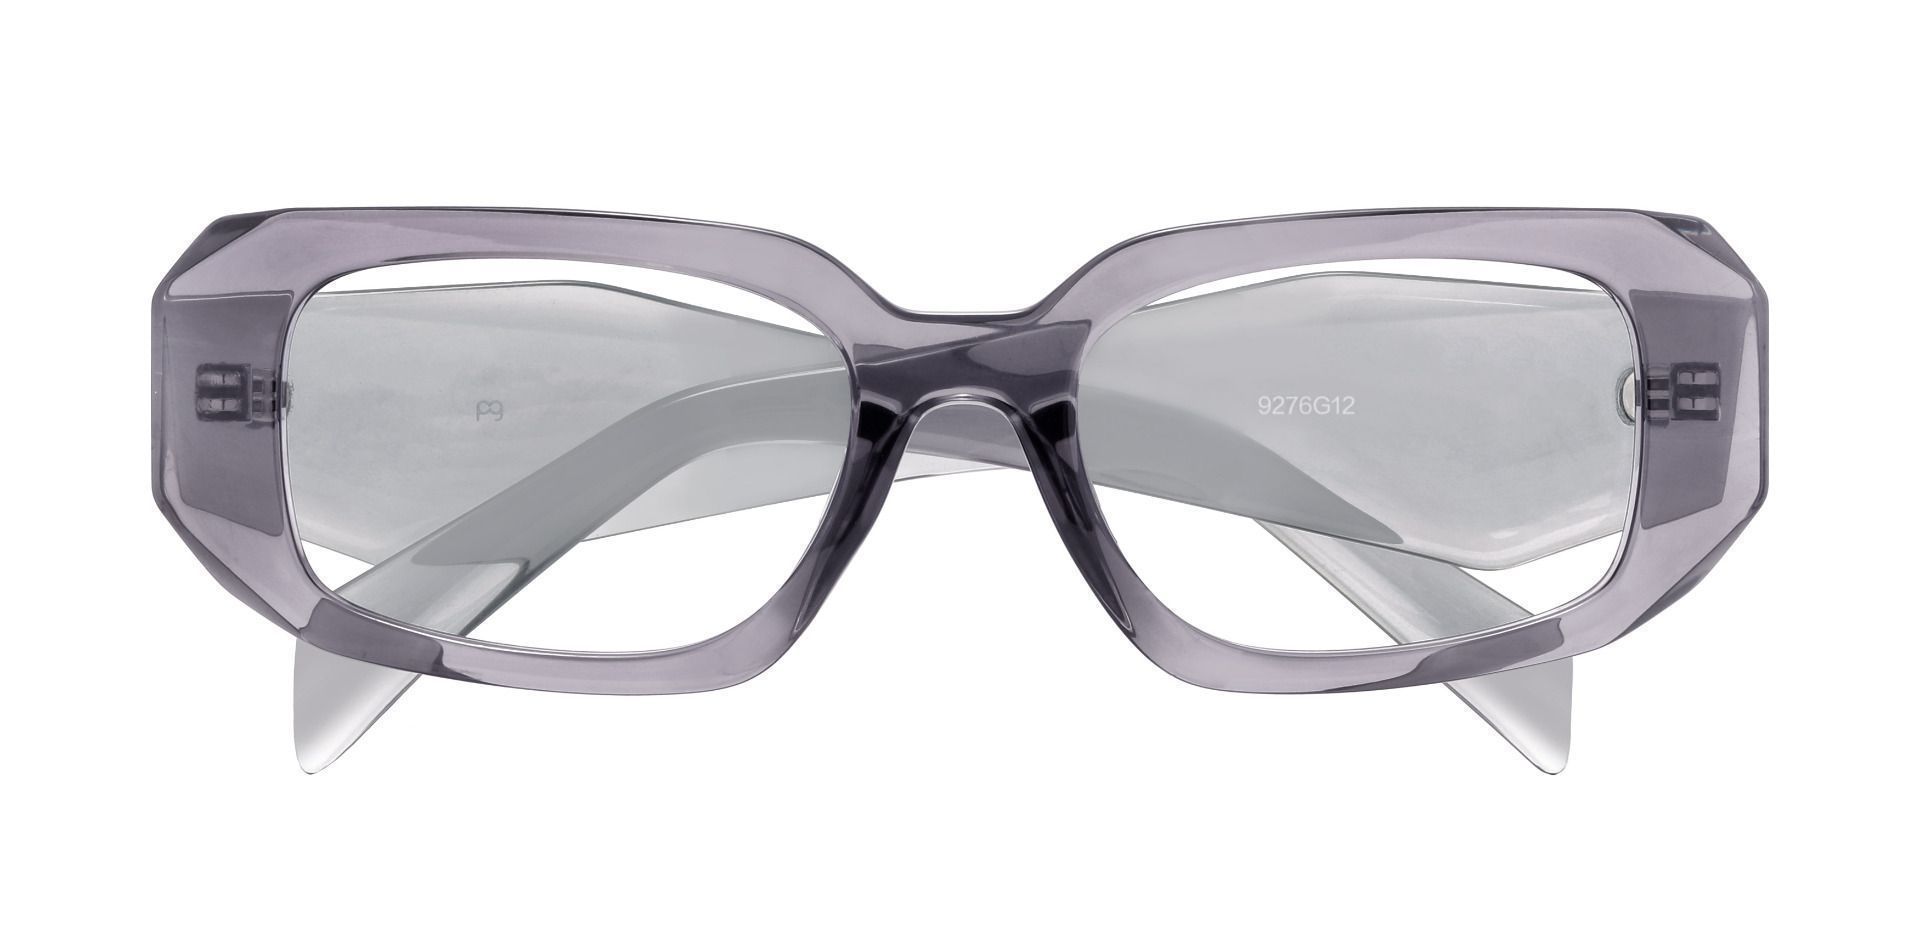 Fresno Geometric Prescription Glasses - Gray